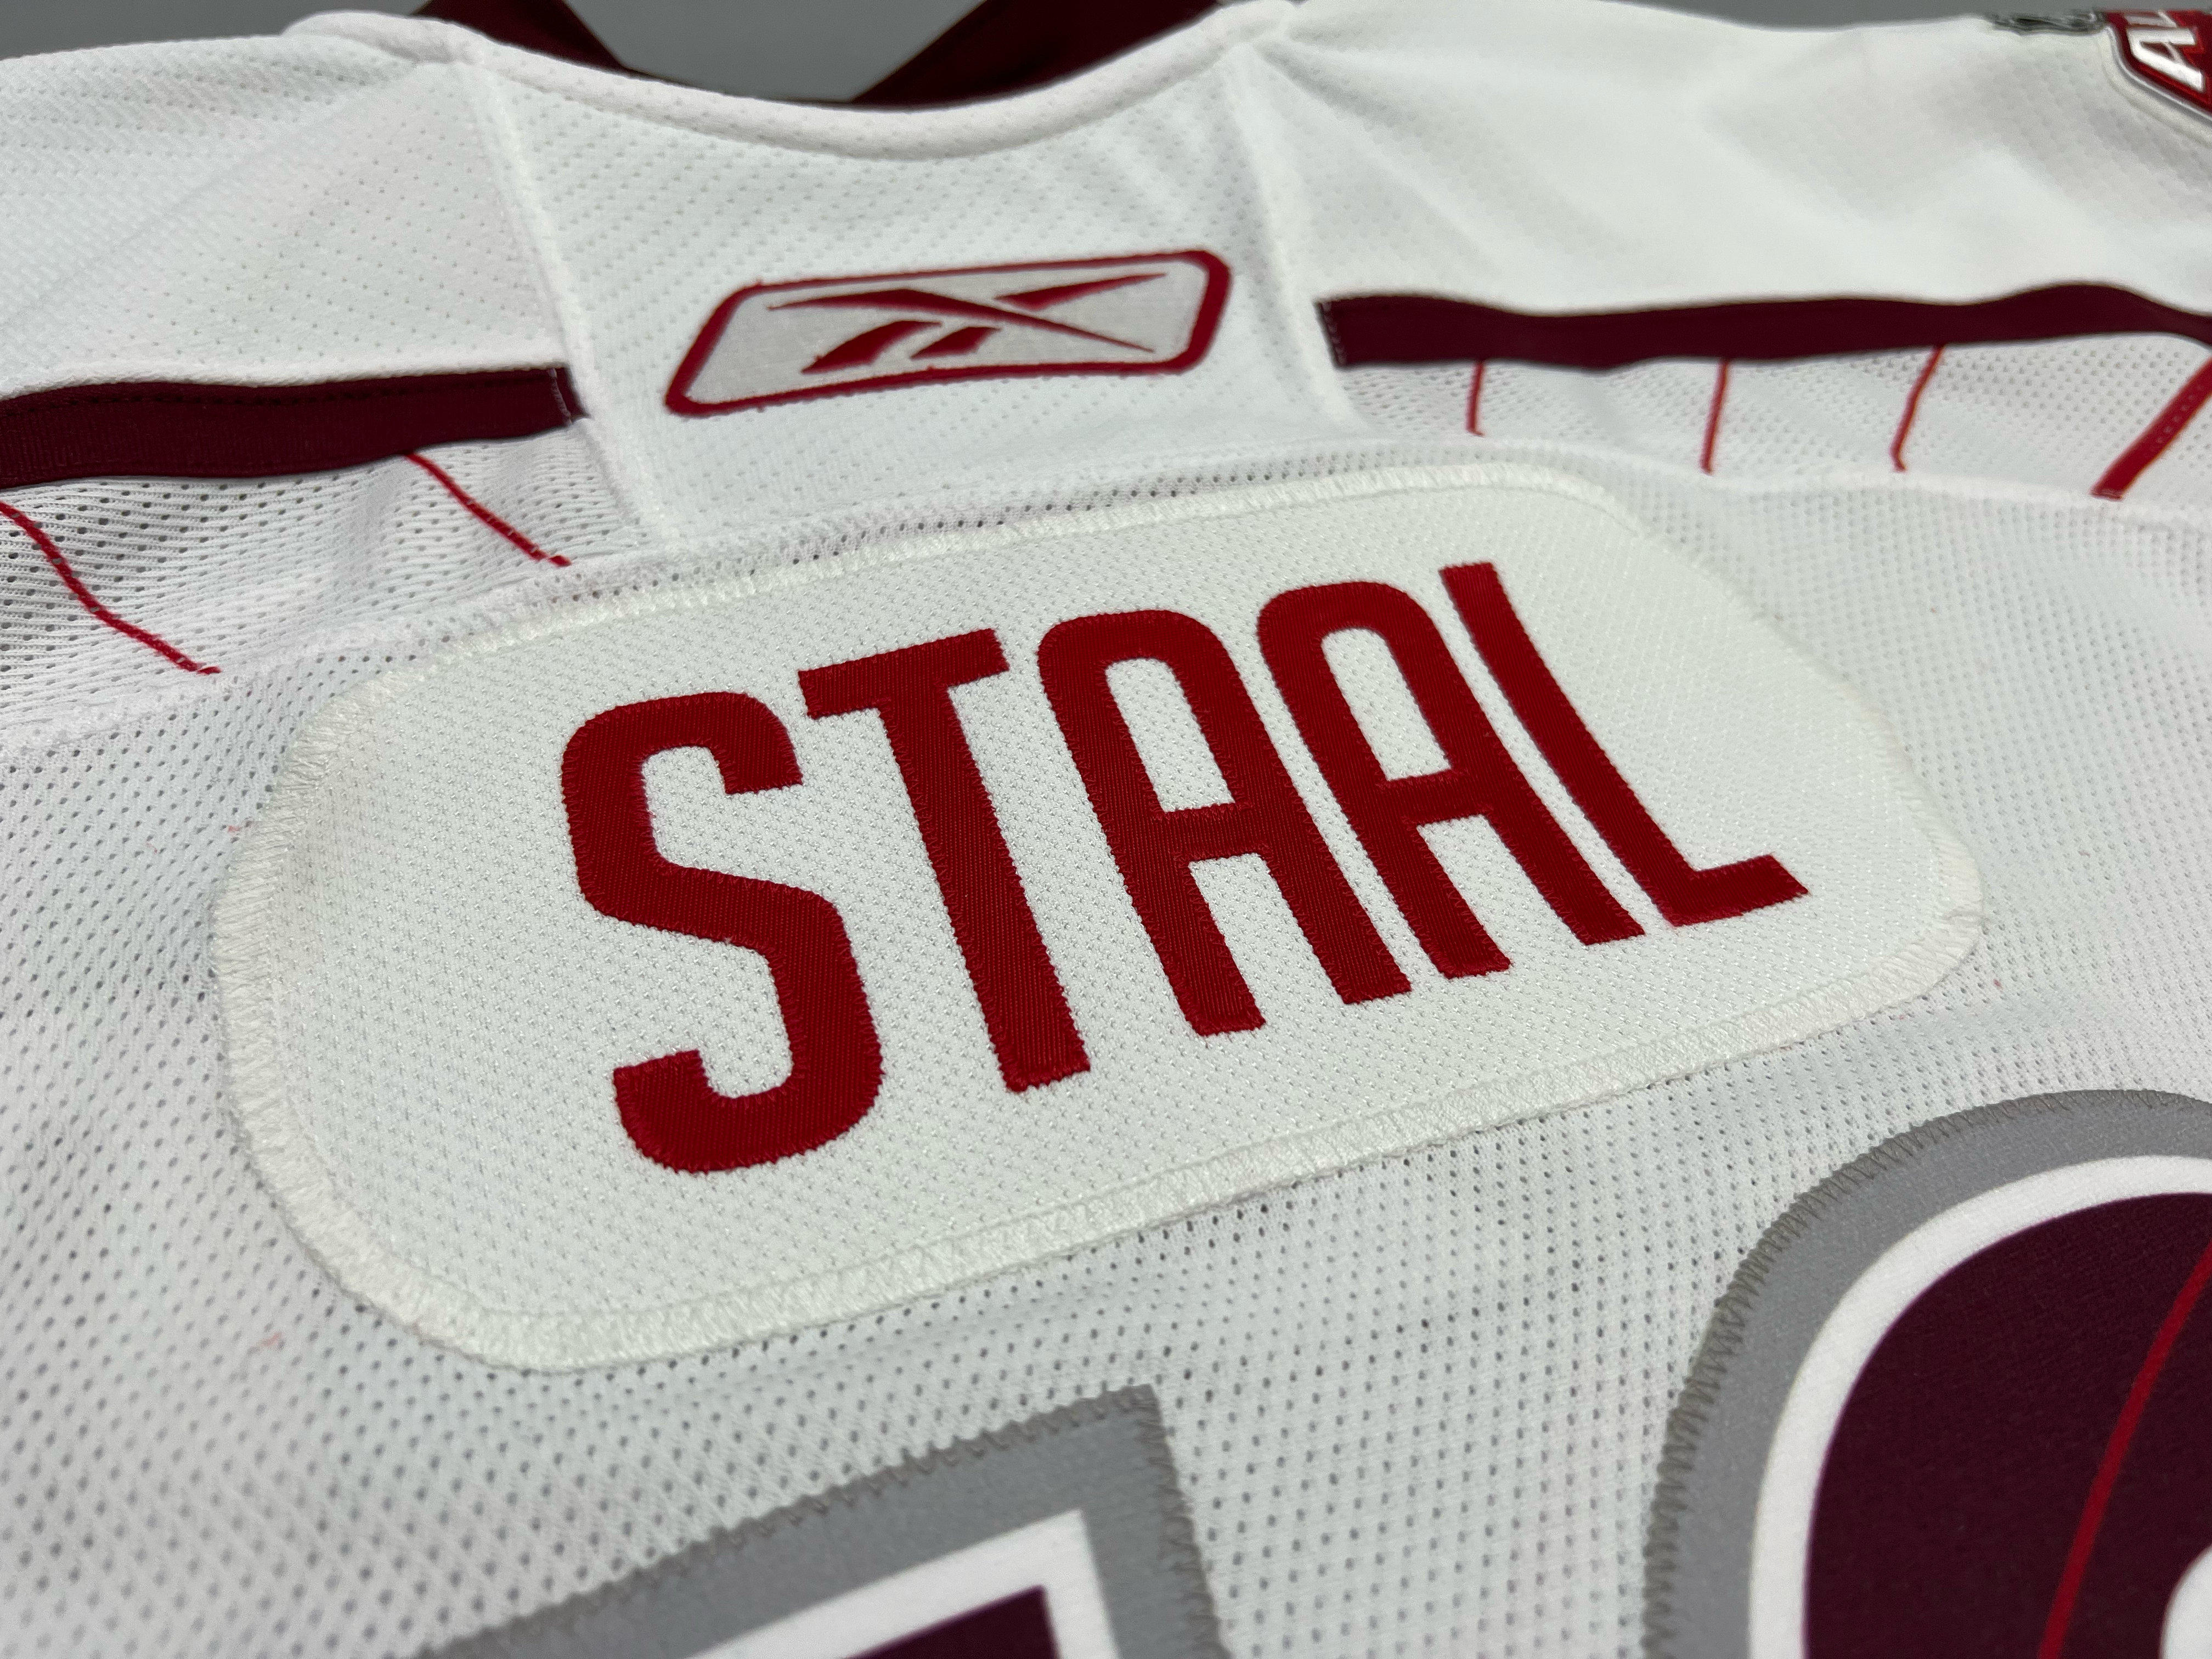 New 2022 NHL All Star hockey jersey size 52